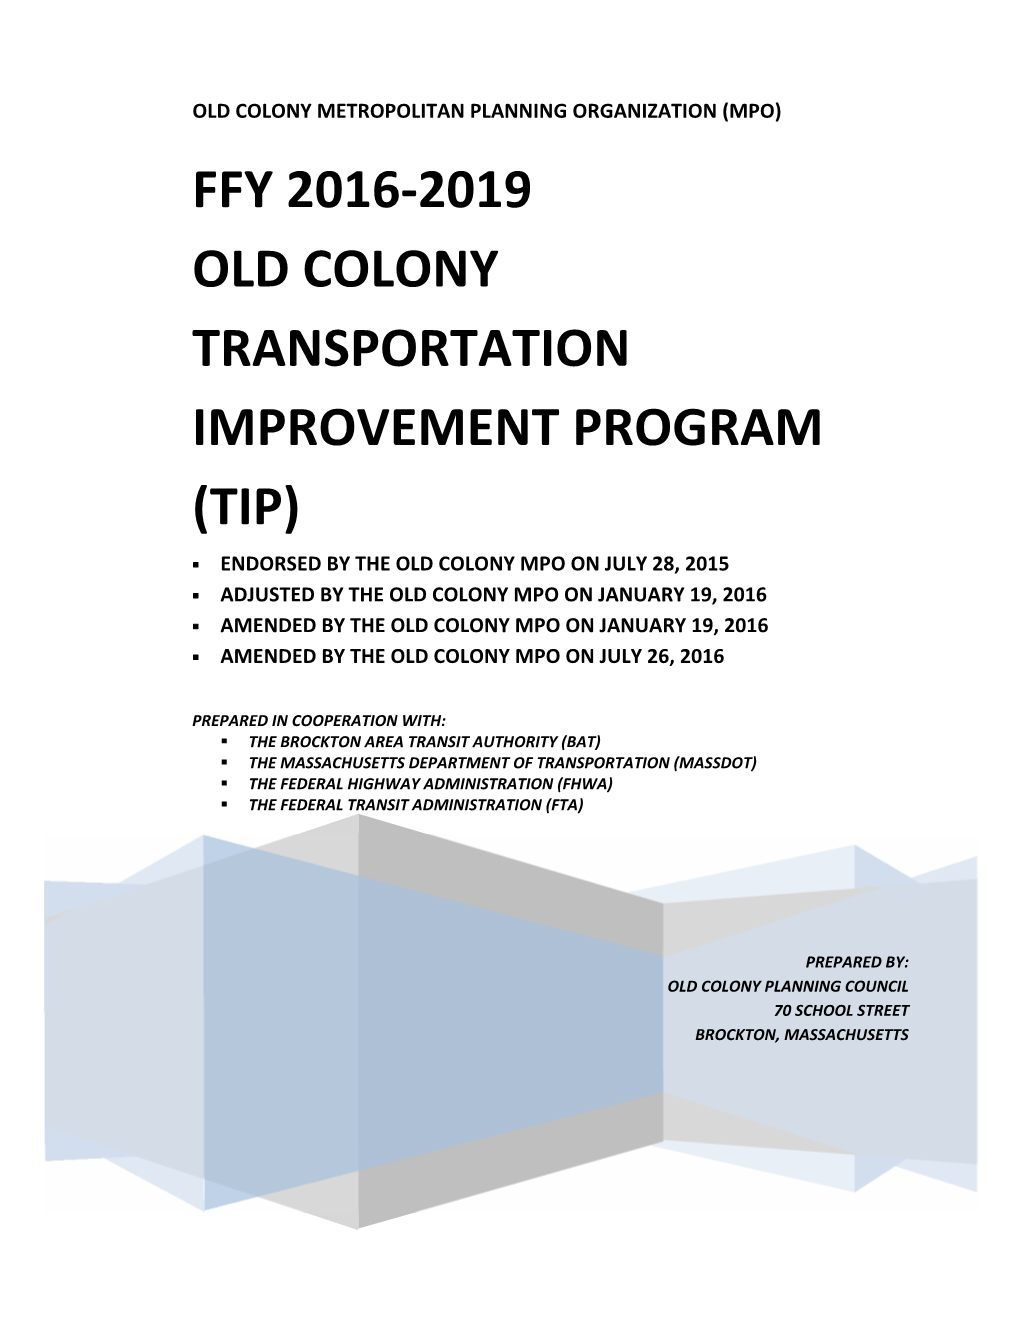 Ffy 2016-2019 Transportation Improvement Program (Tip) Highway Projects Evaluated Using Transportation Evaluation Criteria (